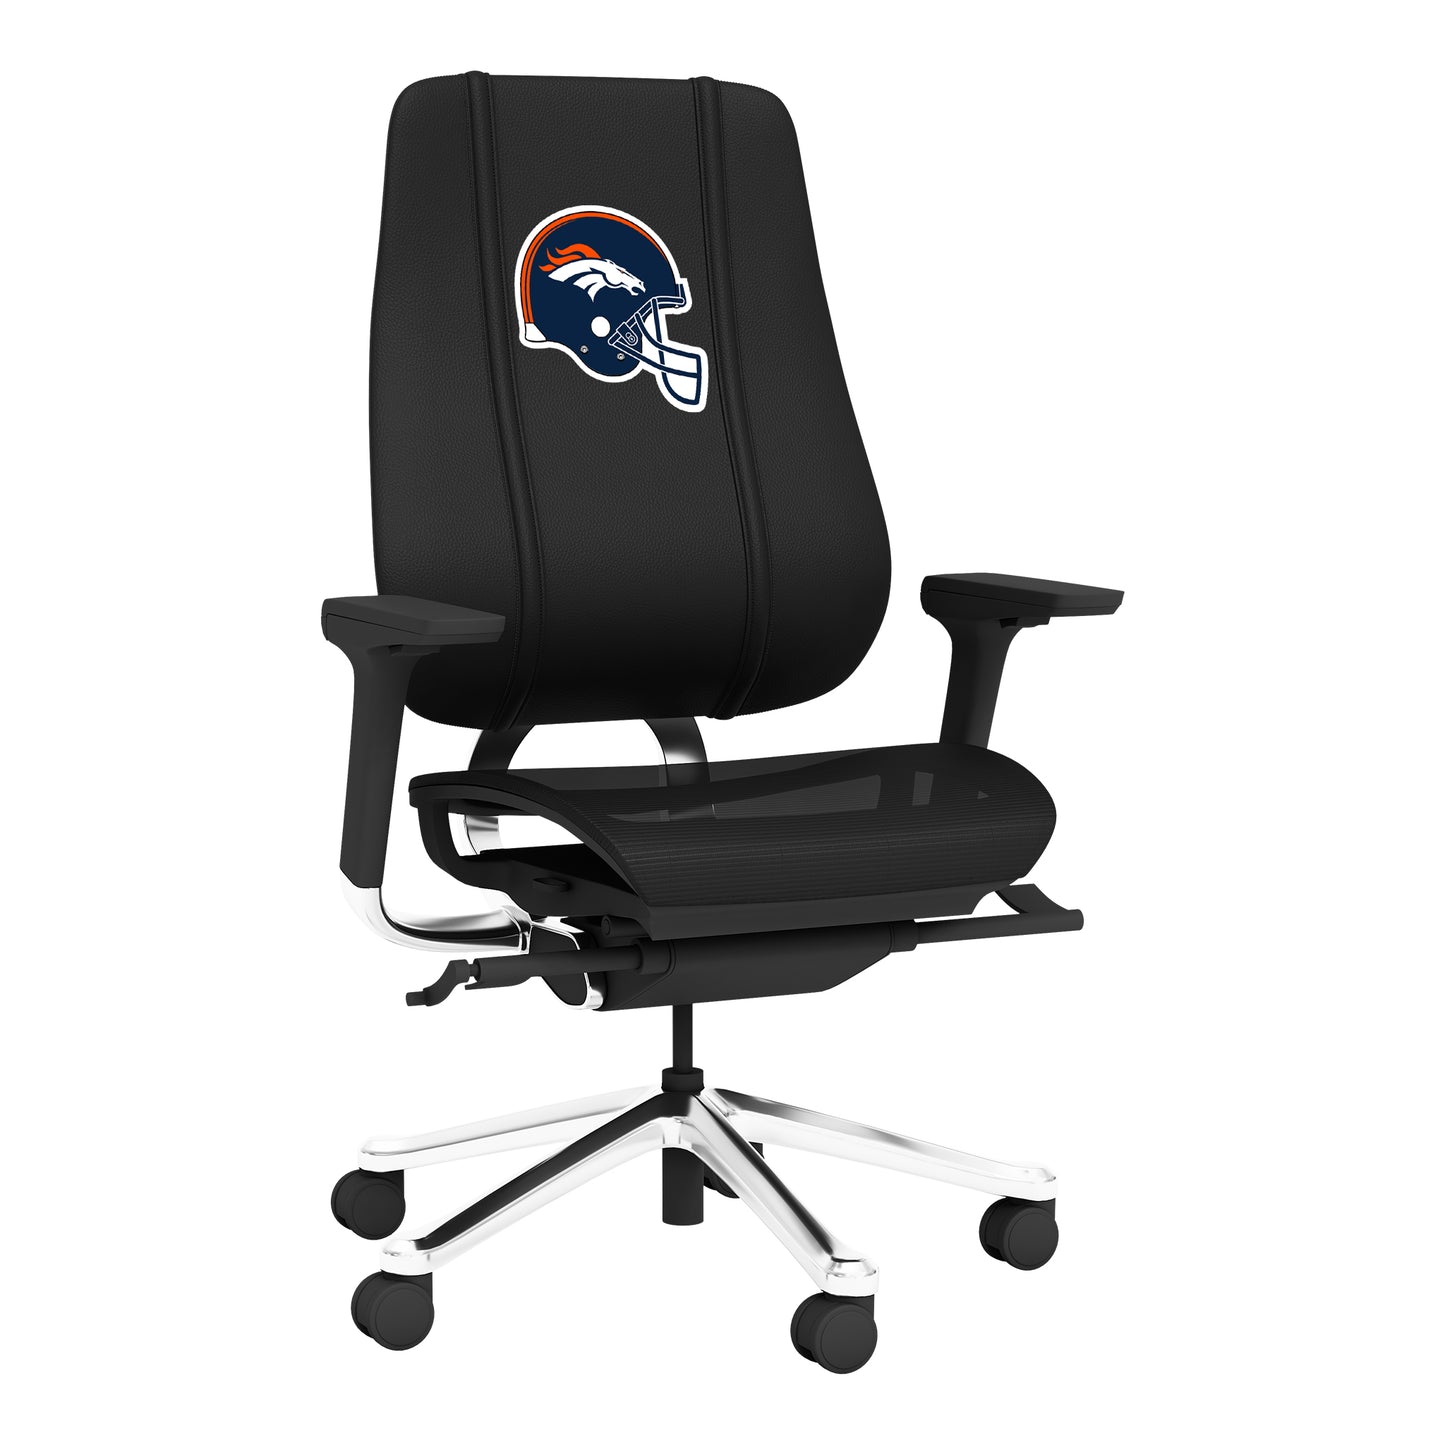 PhantomX Mesh Gaming Chair with  Denver Broncos Helmet Logo